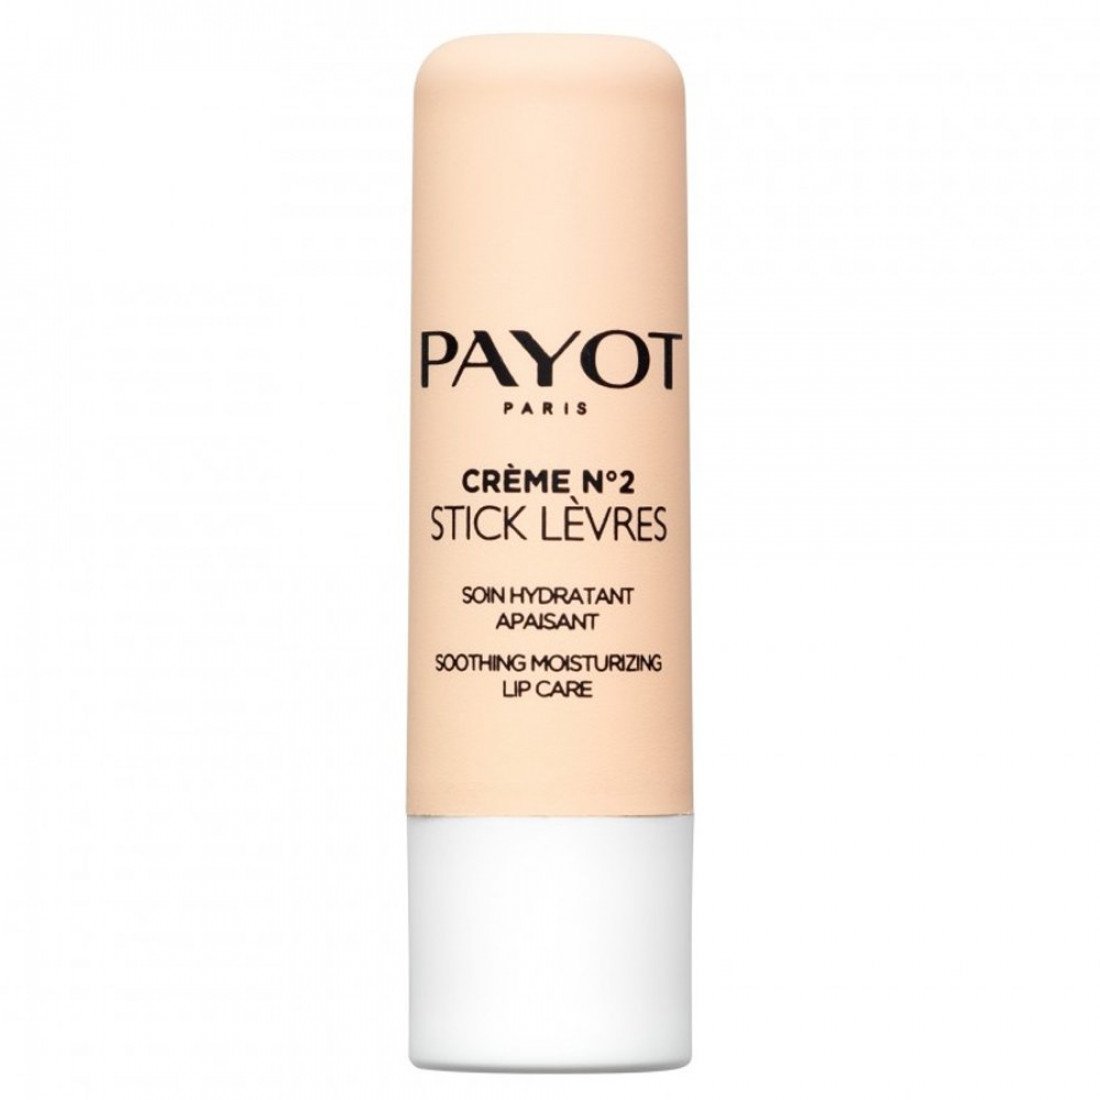 Payot Бальзам для губ Creme No 2 Stick Levres 4г payot creme 2 stick levres soothing moisturizing lip care